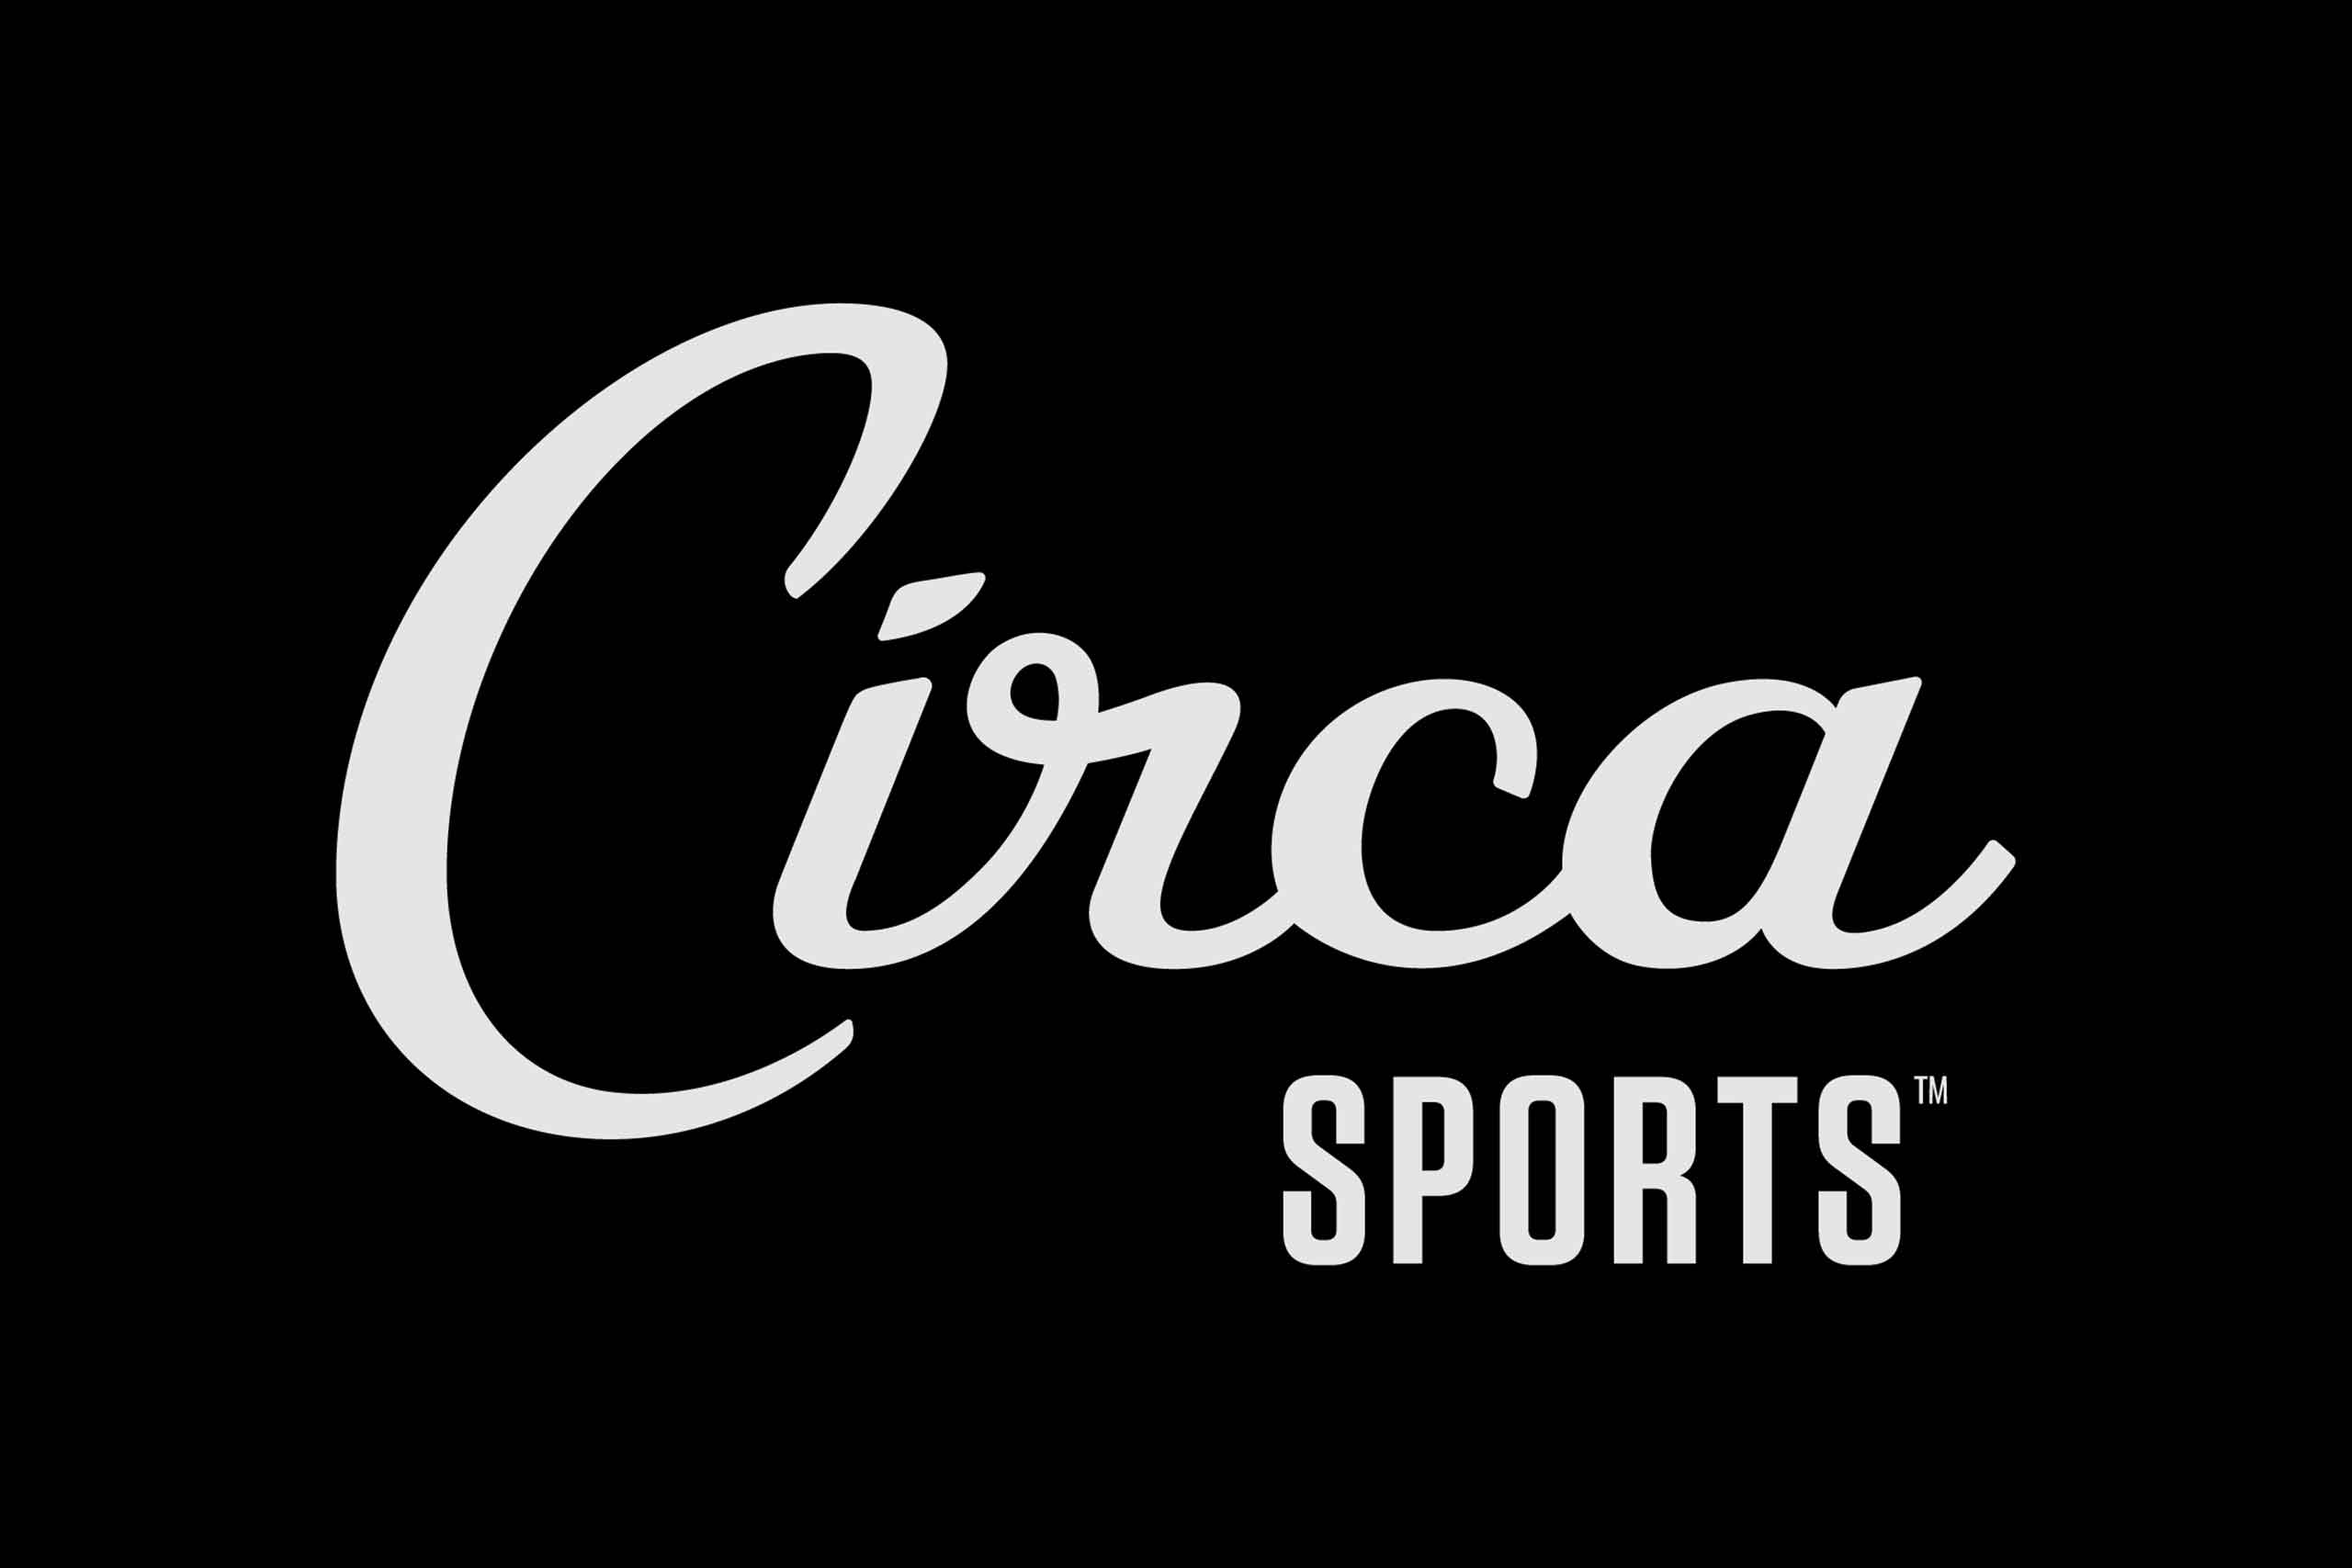 circa sports sportsbook logo